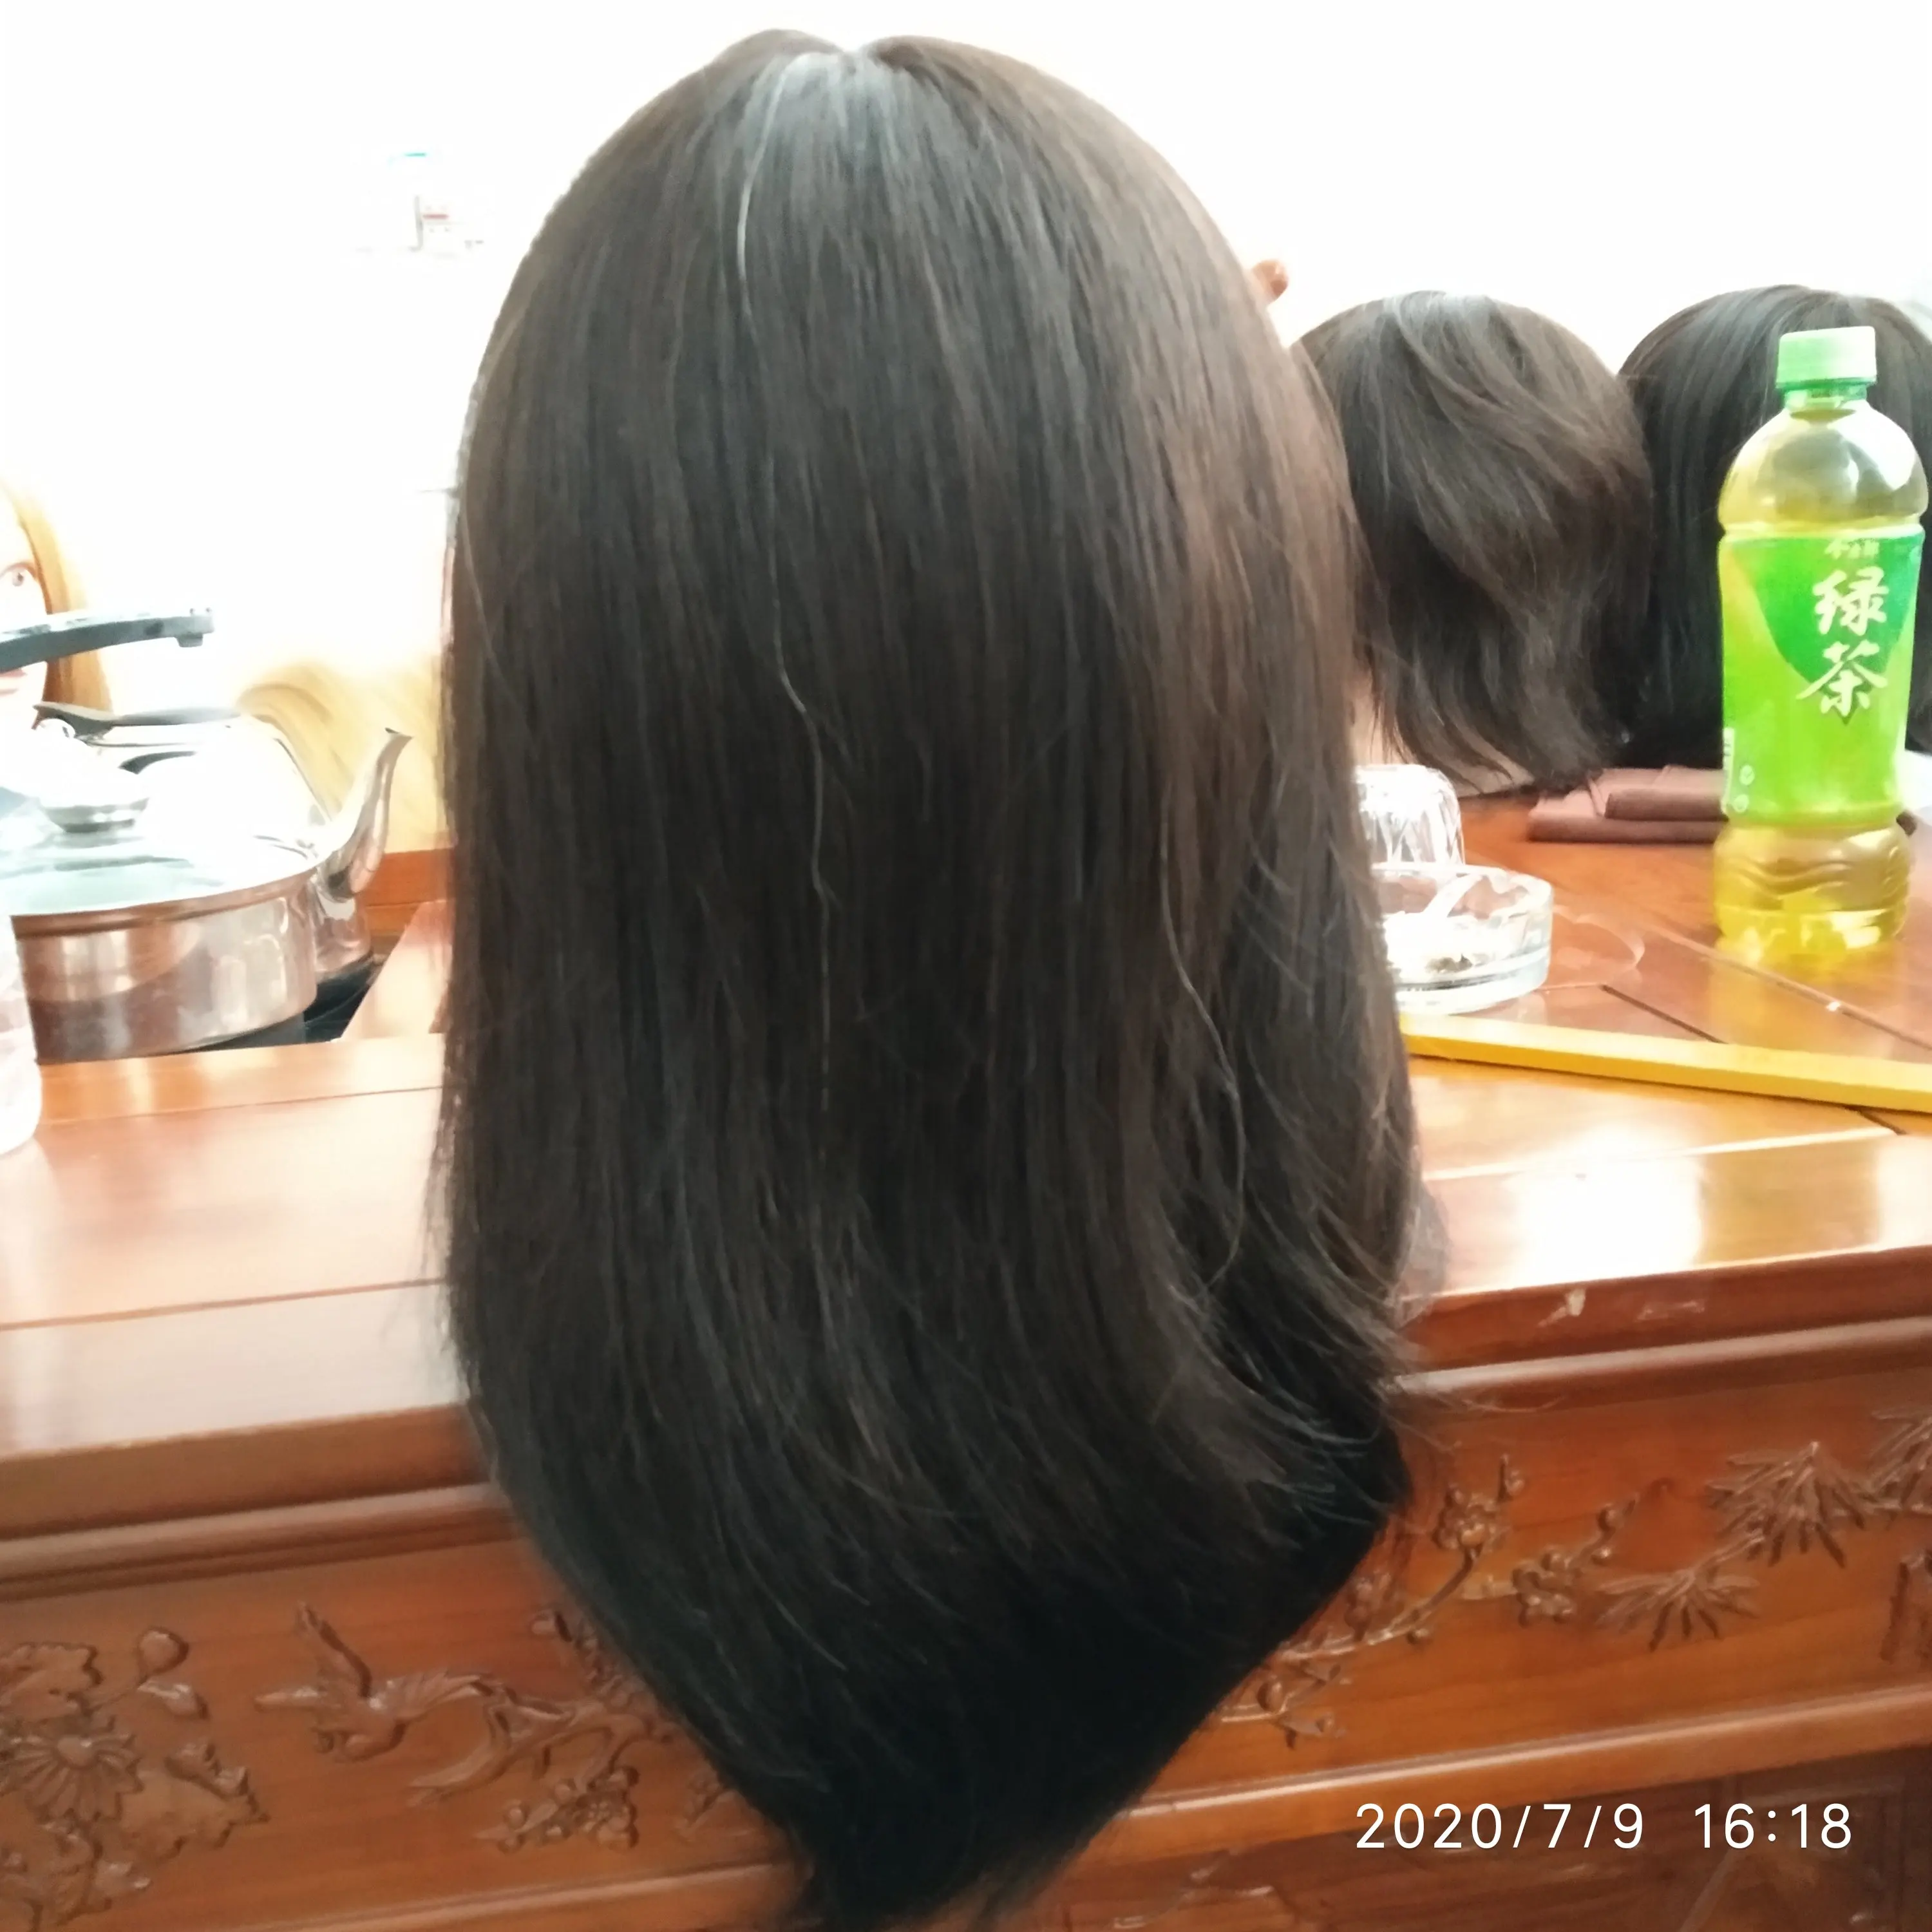 100% Human Hair Doll Head For  Sale Hairdressers Practice Paint Dye Bleach Curl Iron Braid Cut Hair Training Mannequin Head enlarge